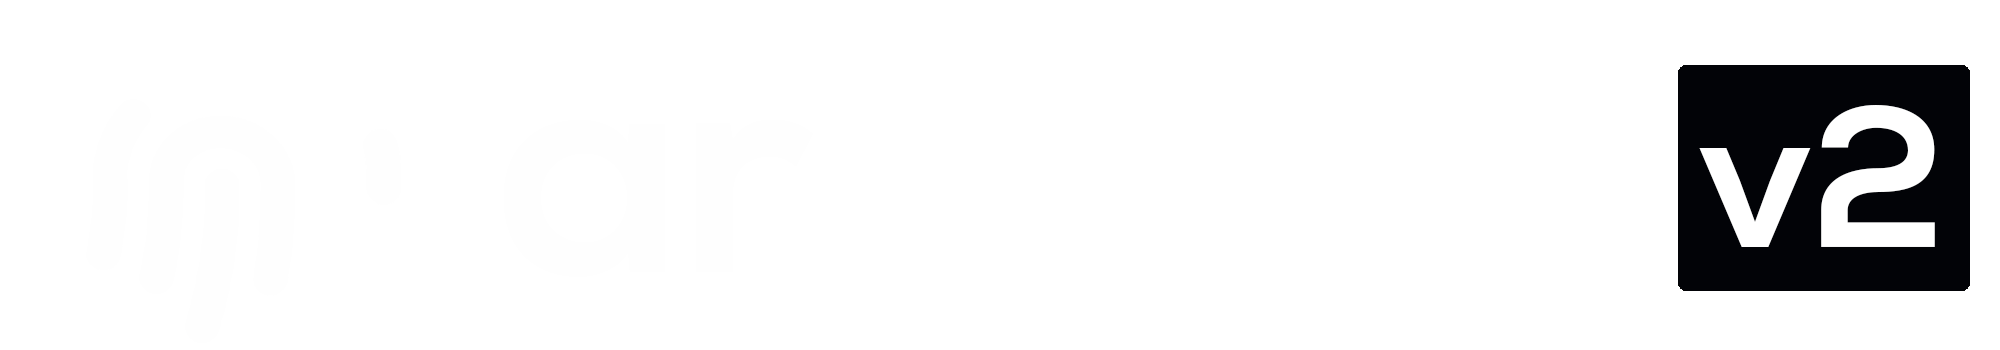 larapass-logo